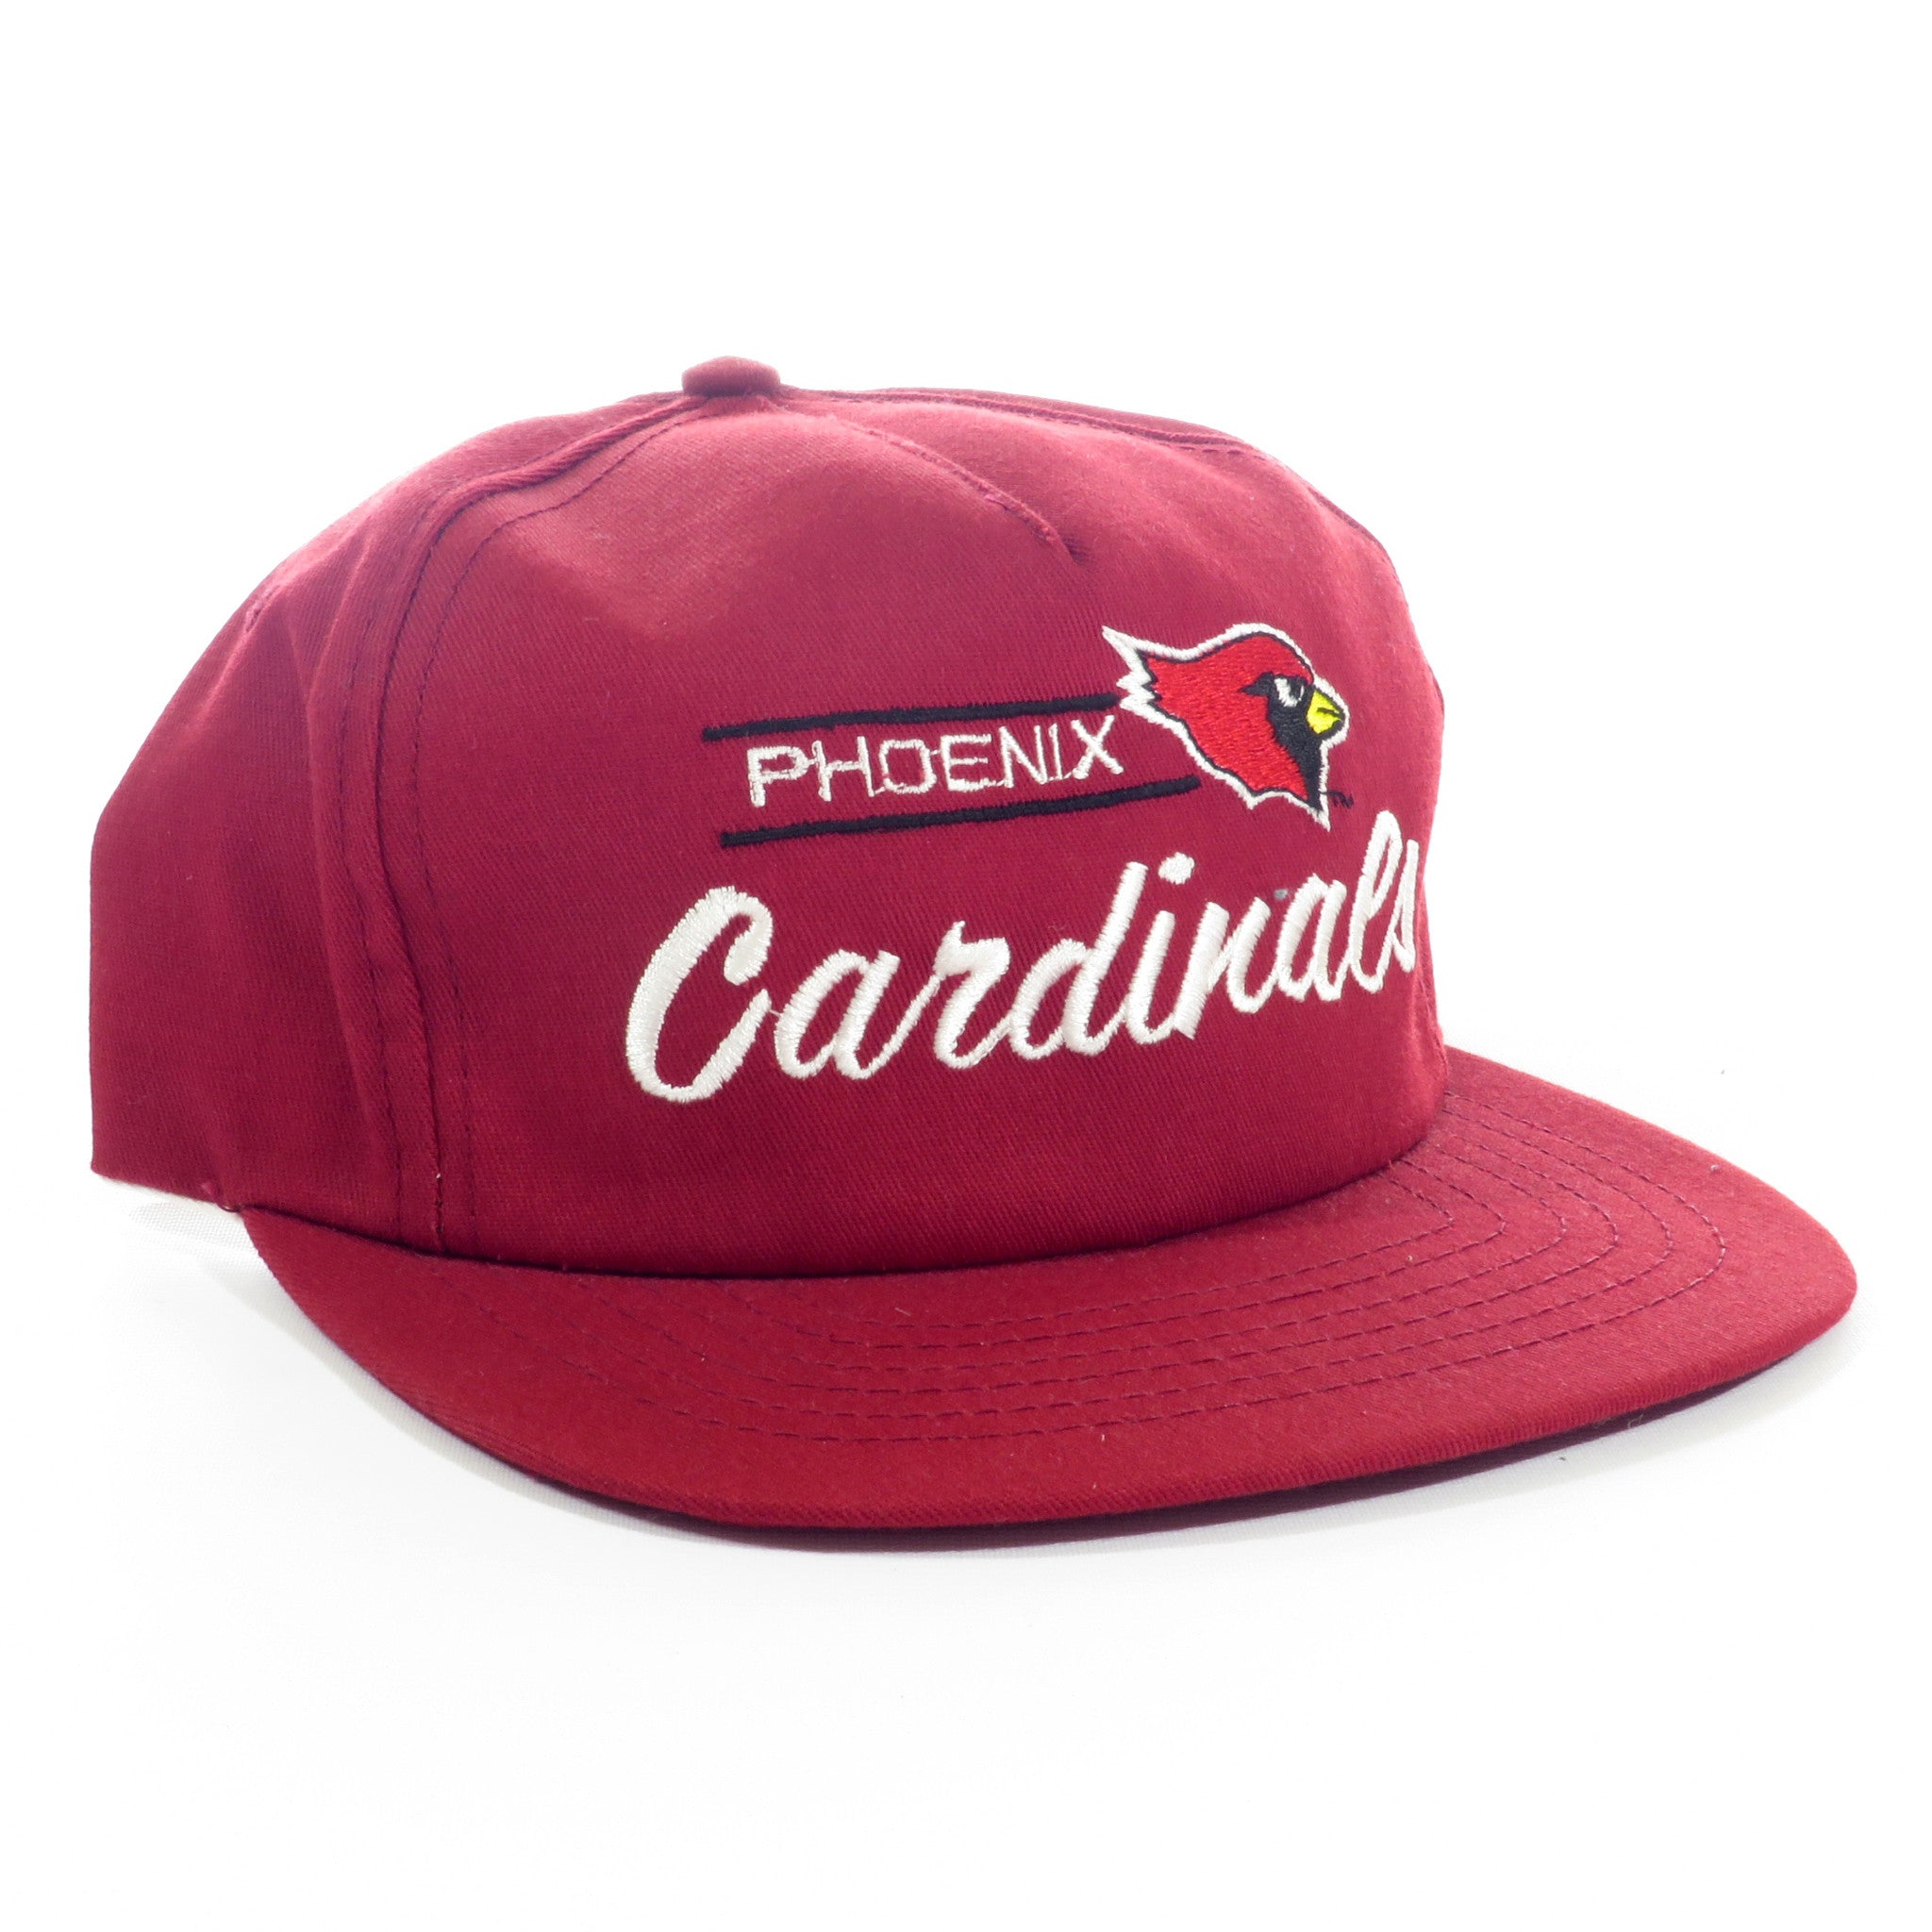 phoenix cardinals hat